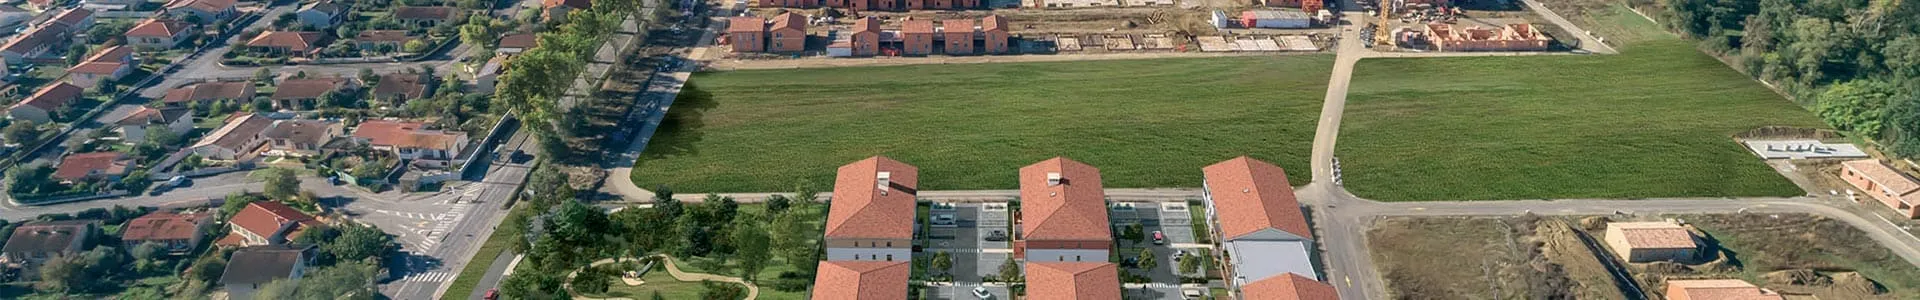 Vue aérienne de la résidence Via Romana